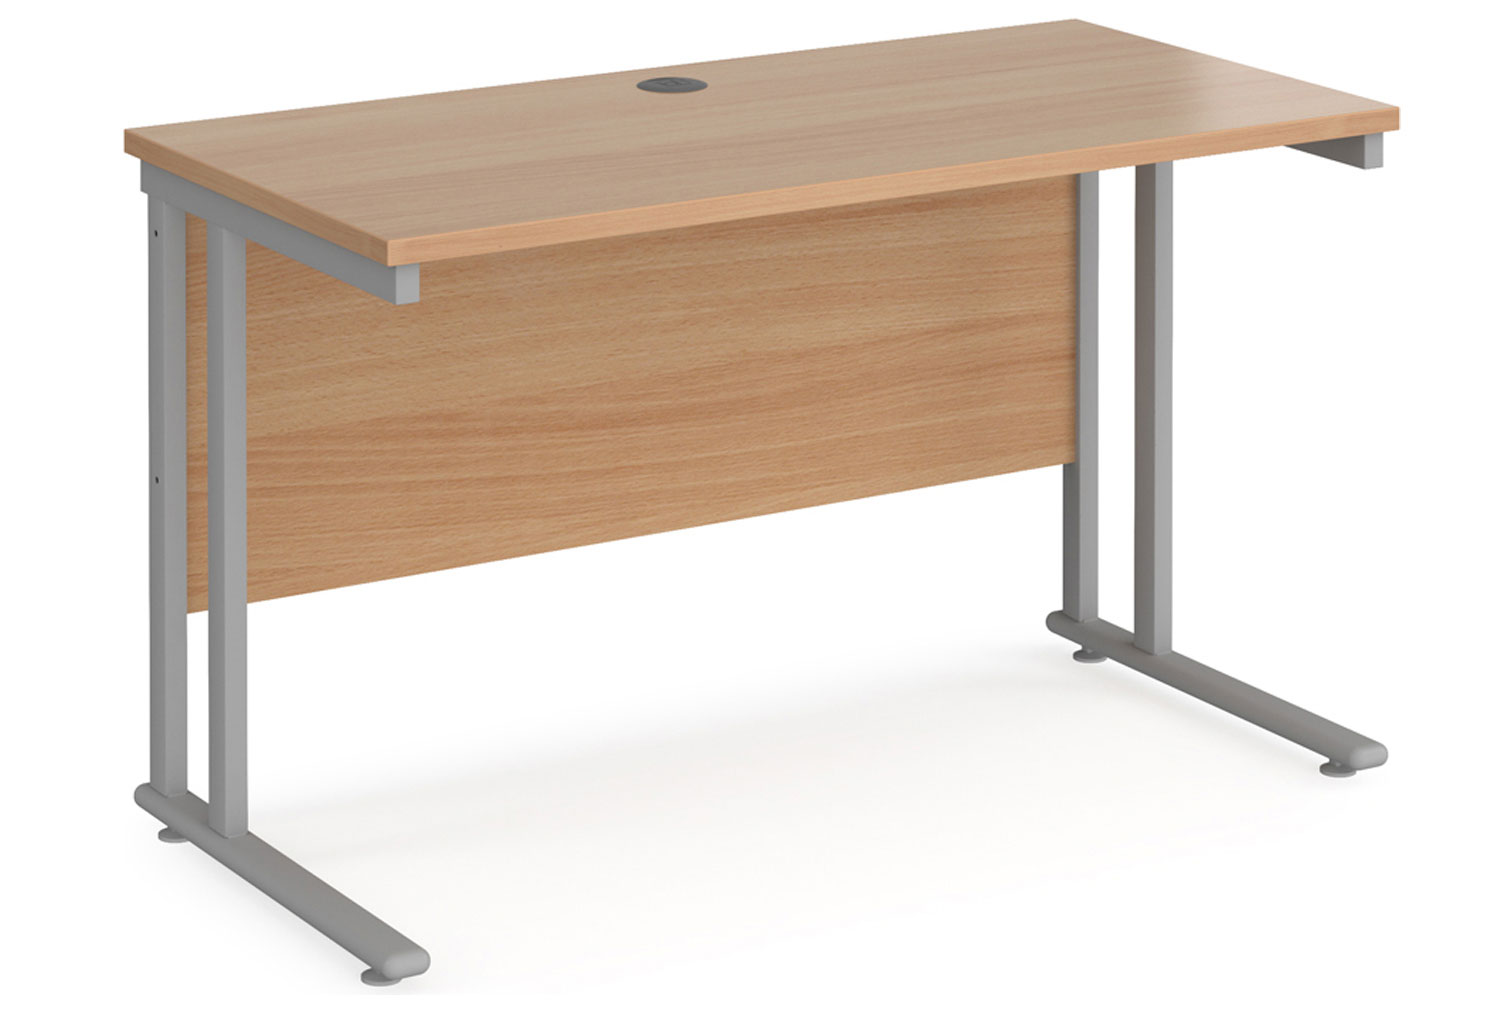 Value Line Deluxe C-Leg Narrow Rectangular Office Desk (Silver Legs), 120wx60dx73h (cm), Beech